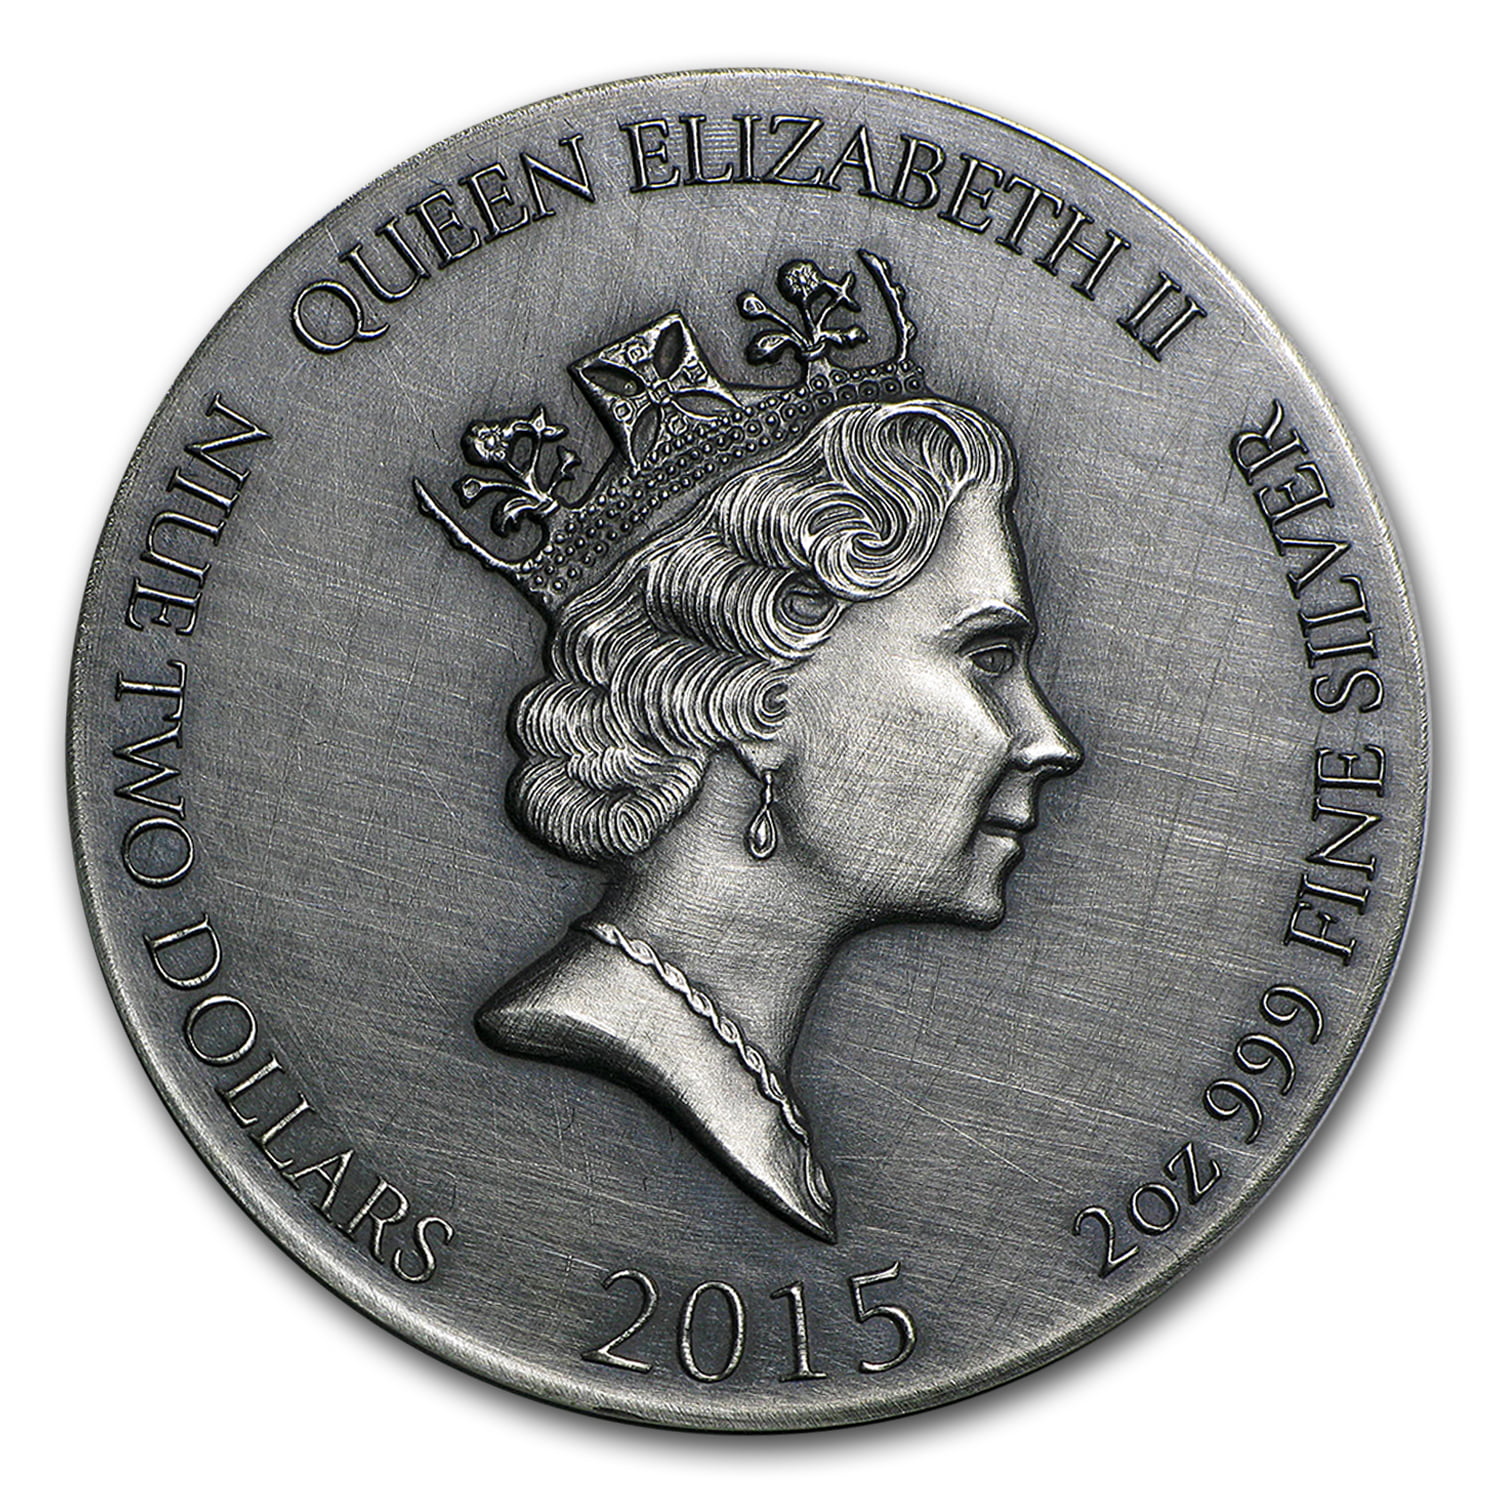 Biblical Series 2015 Niue Ten Commandments 2 oz Silver Coin w/ COA & packaging 